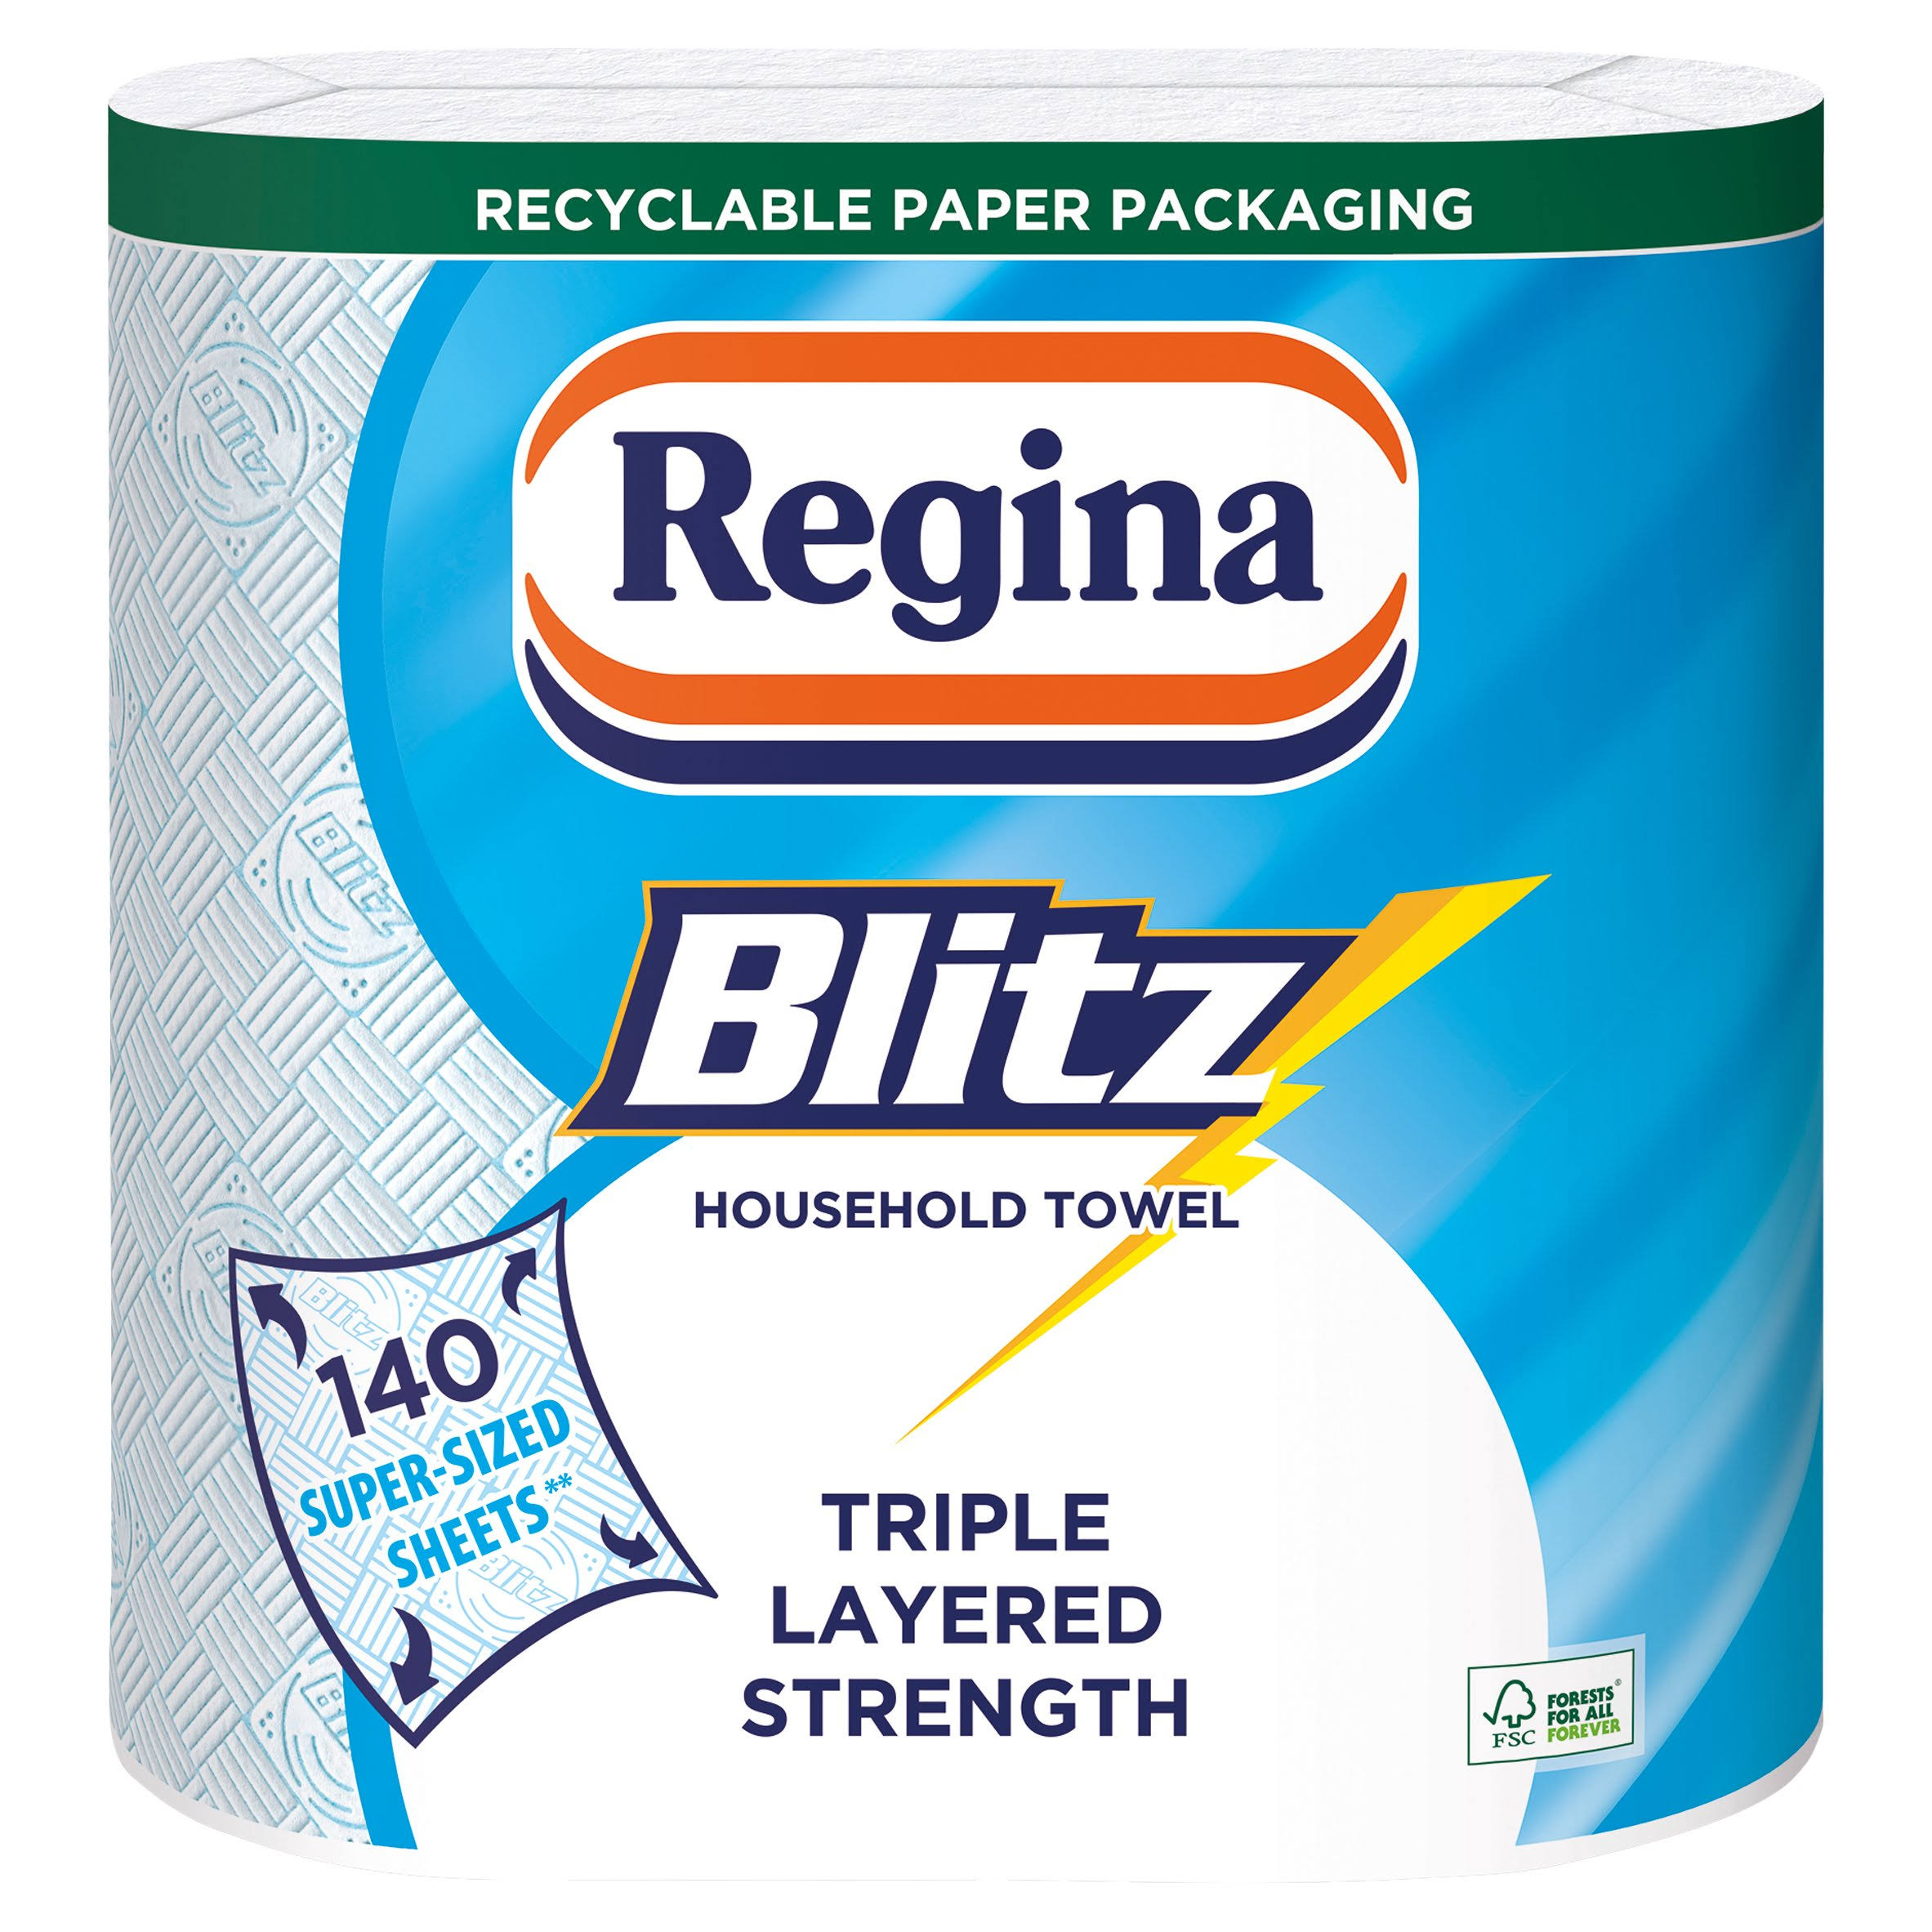 Regina Blitz Household Towel - 140 Sheets, 2 Rolls